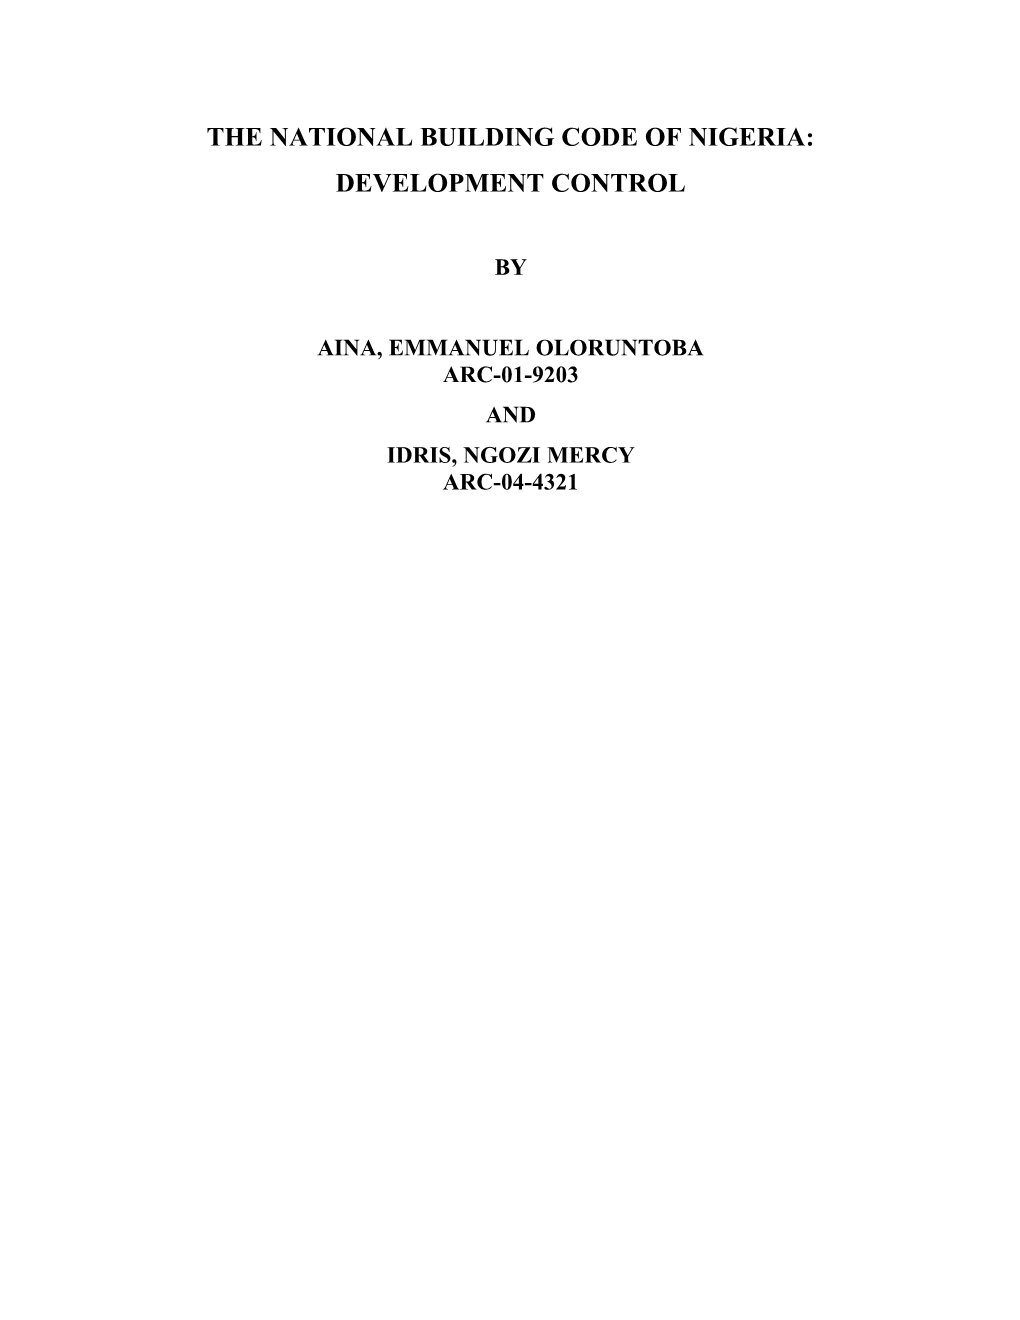 The National Building Code of Nigeria: Development Control